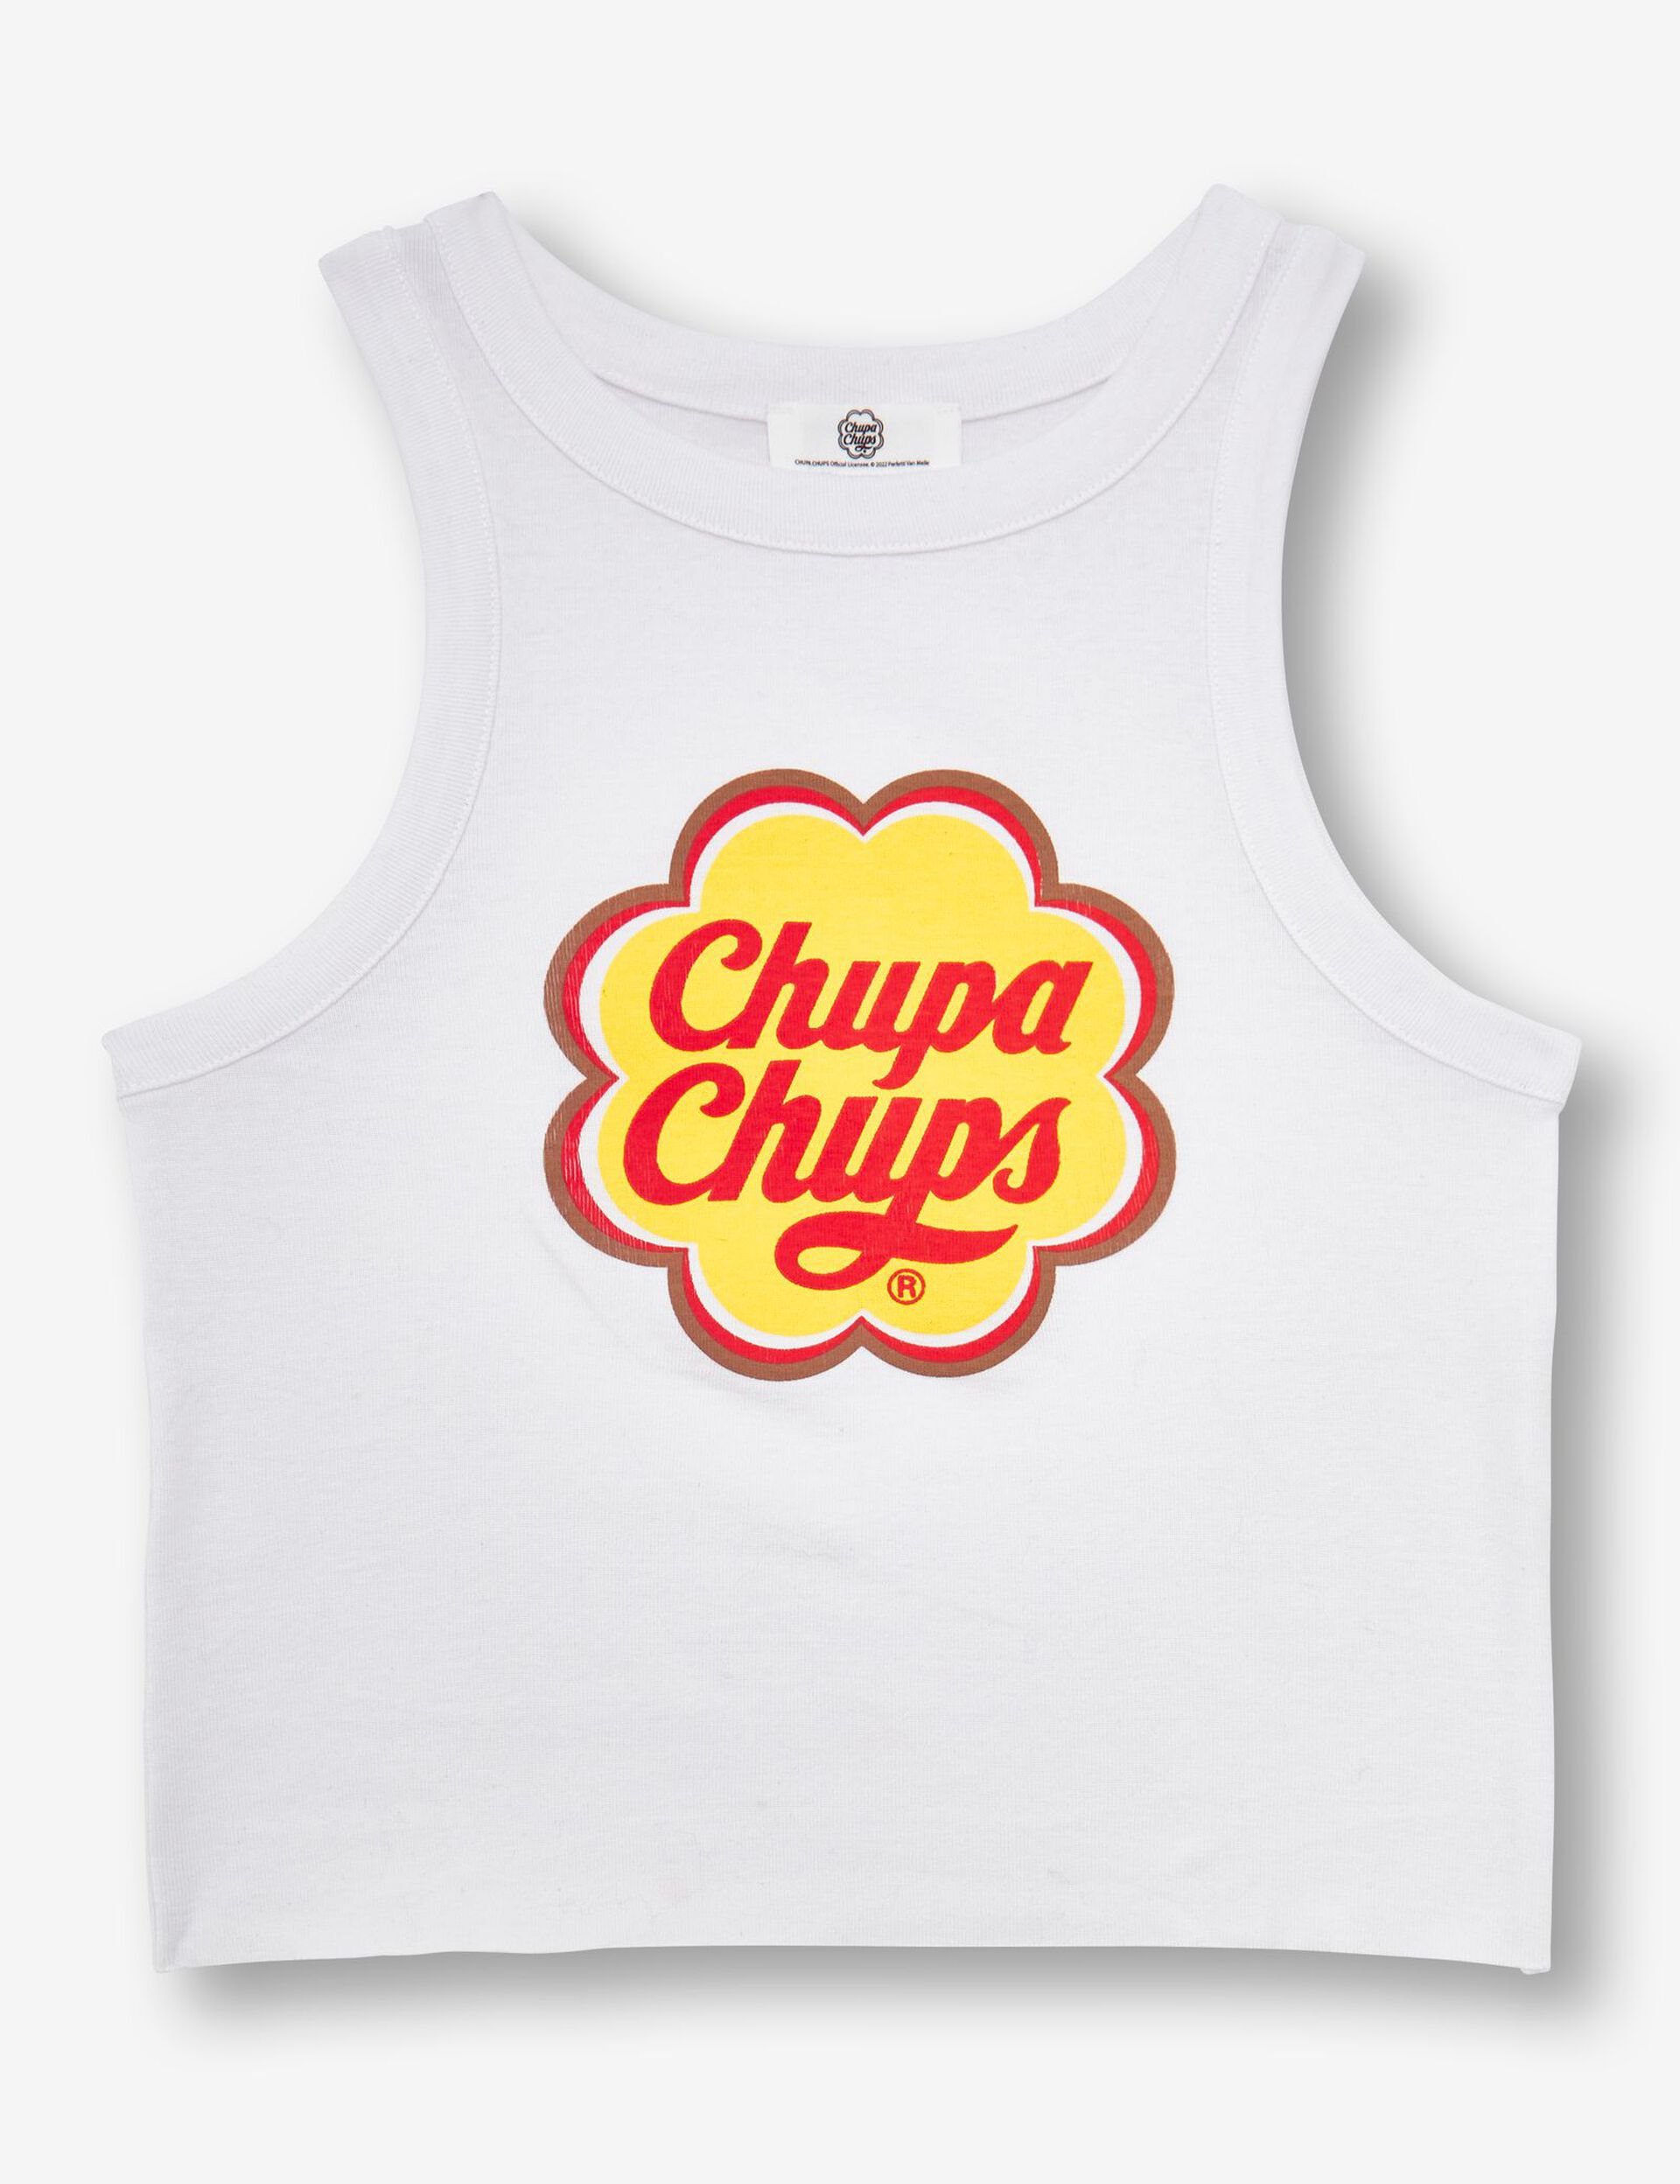 Chupa Chups vest top